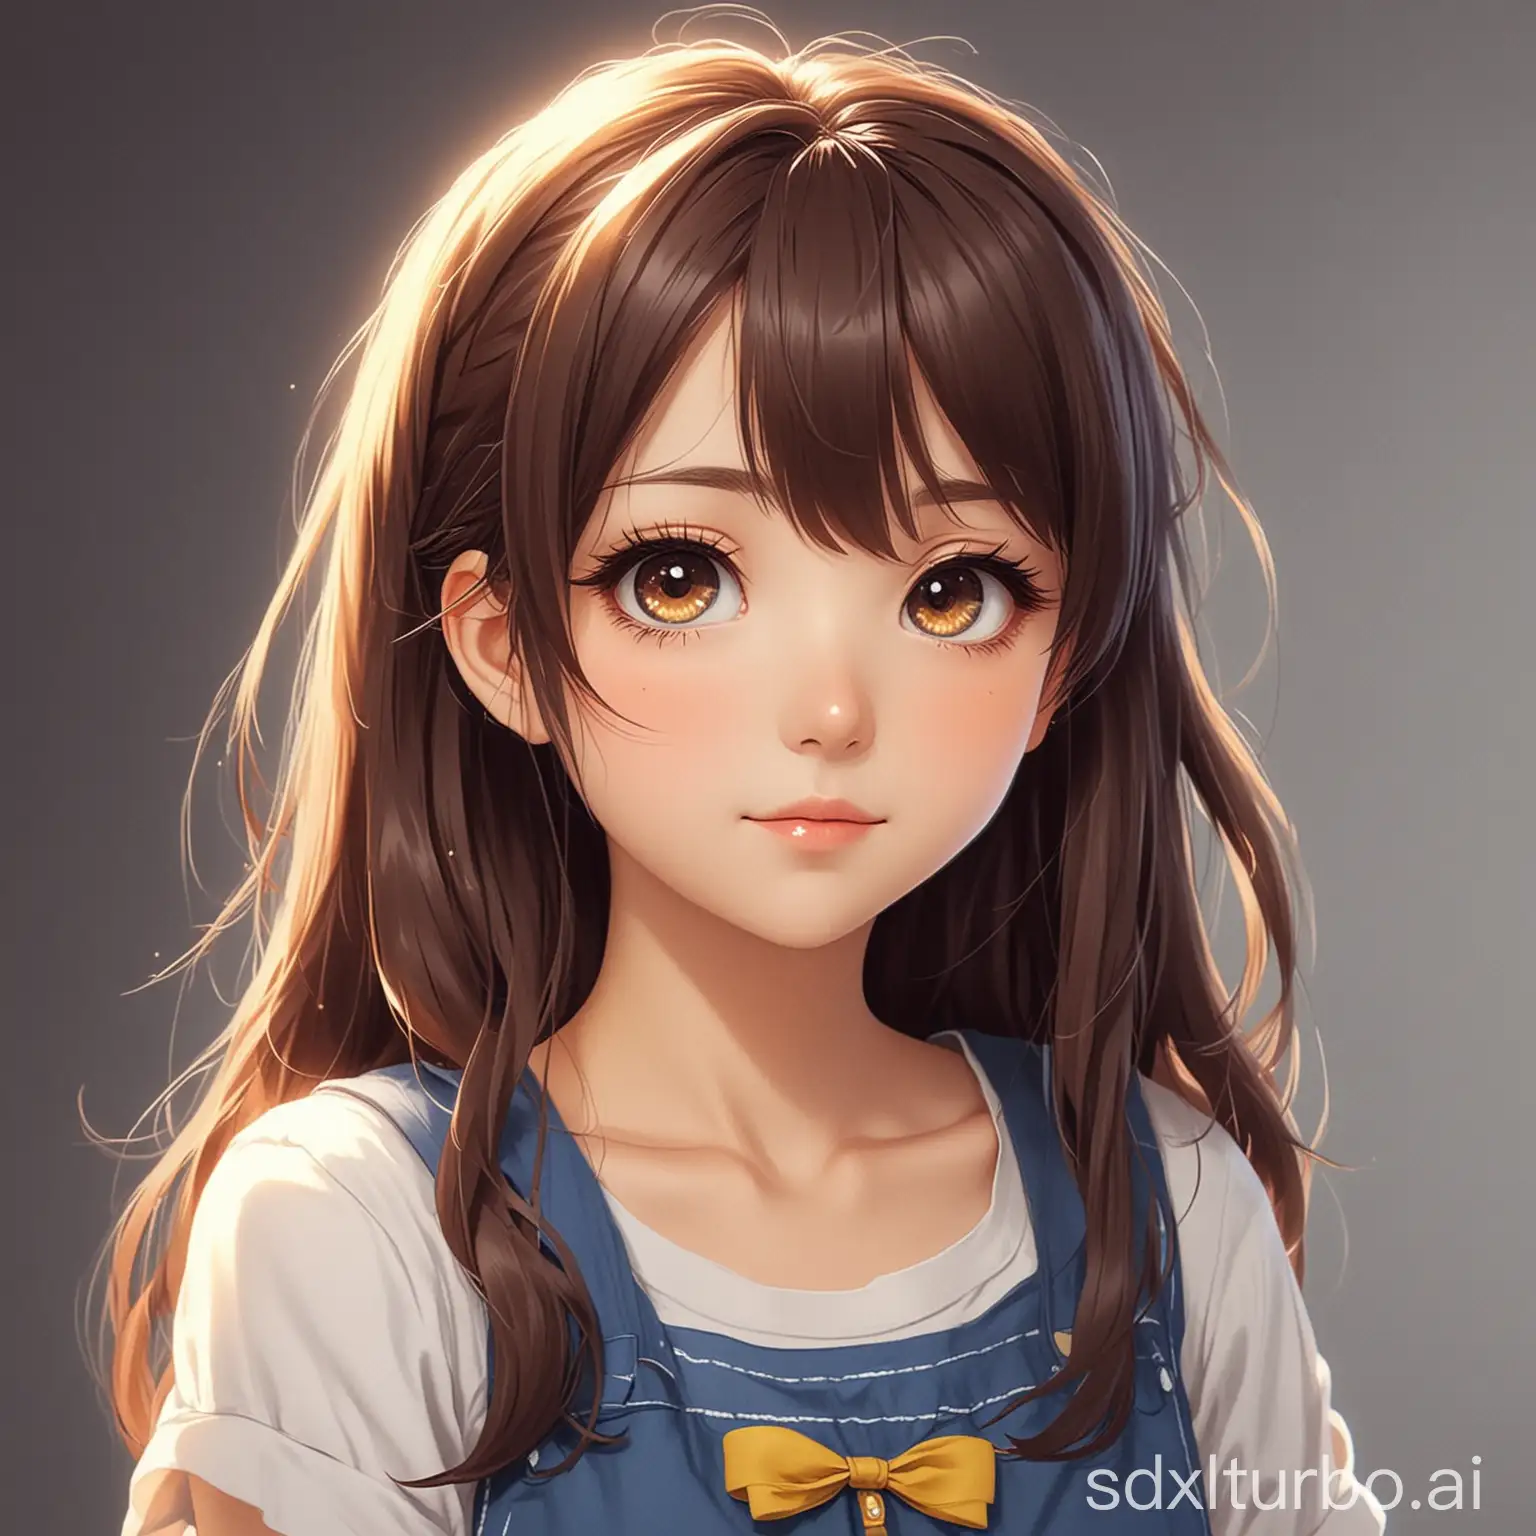 Enchanting-Moe-Anime-Portrait-of-a-Beautiful-Girl